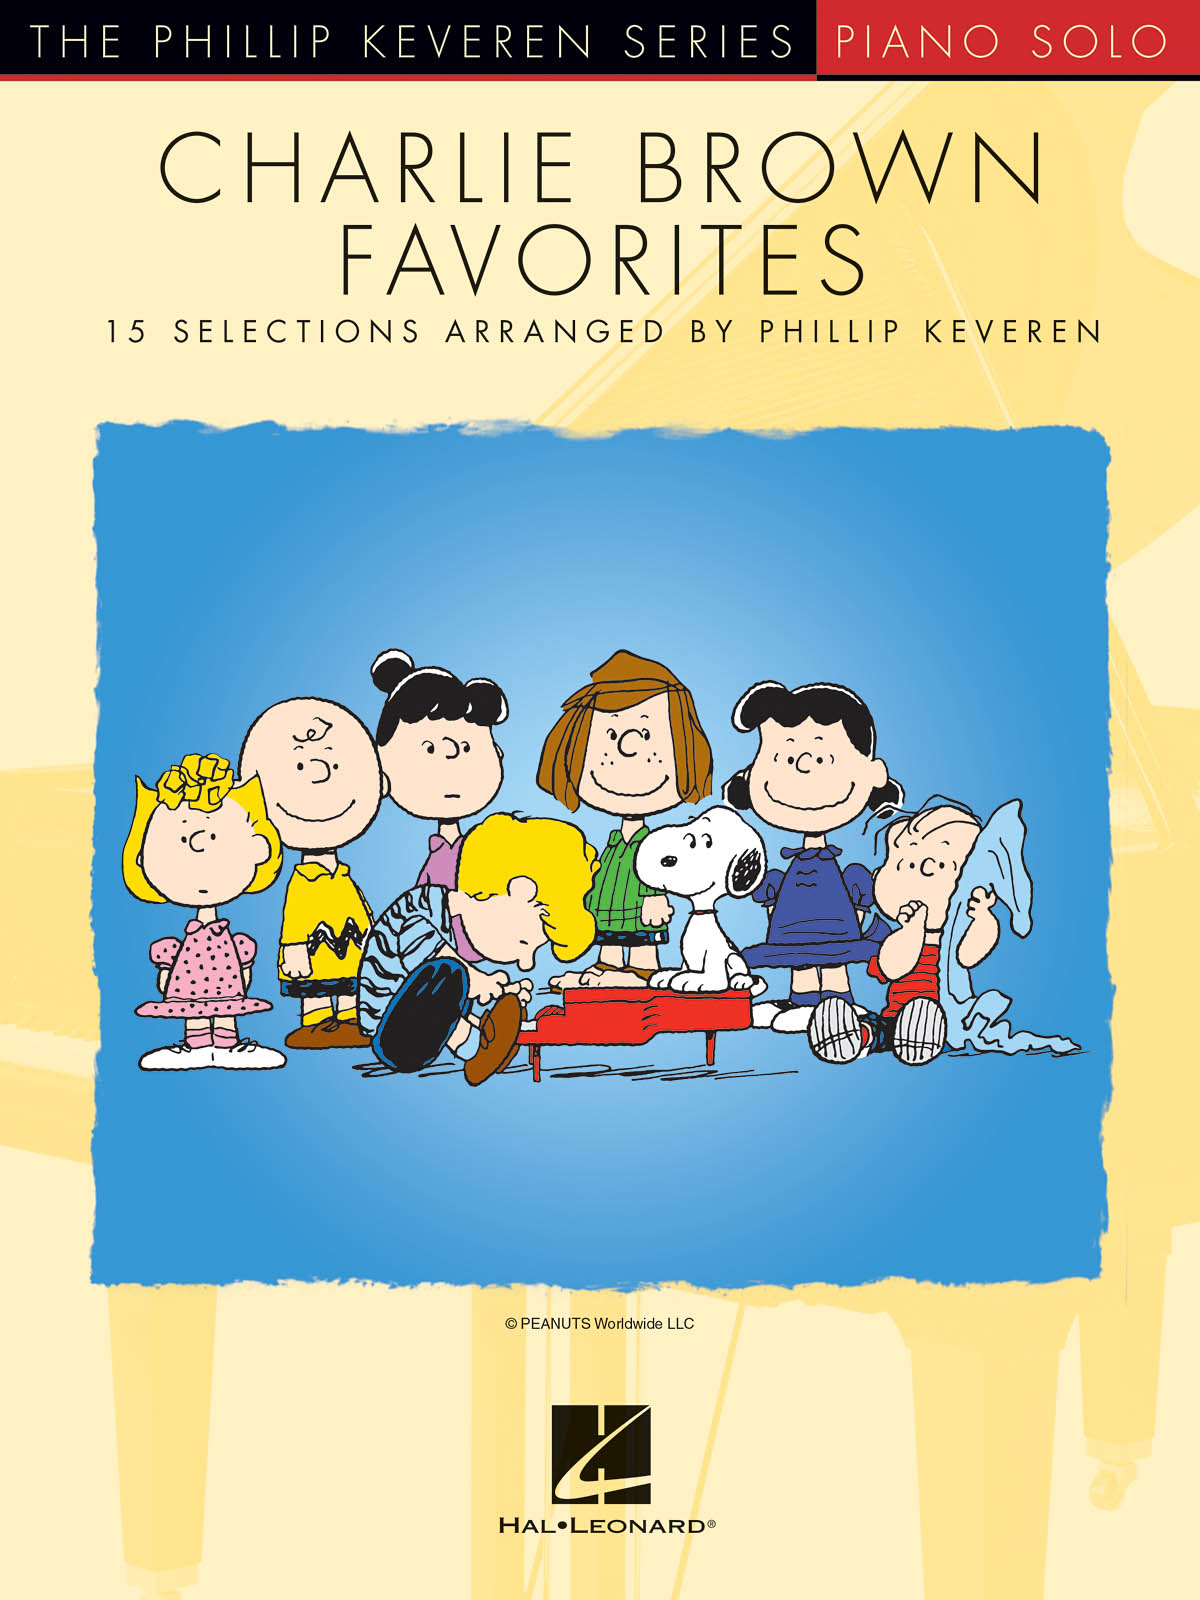 Charlie Brown Favorites (GUARALDI VINCE)